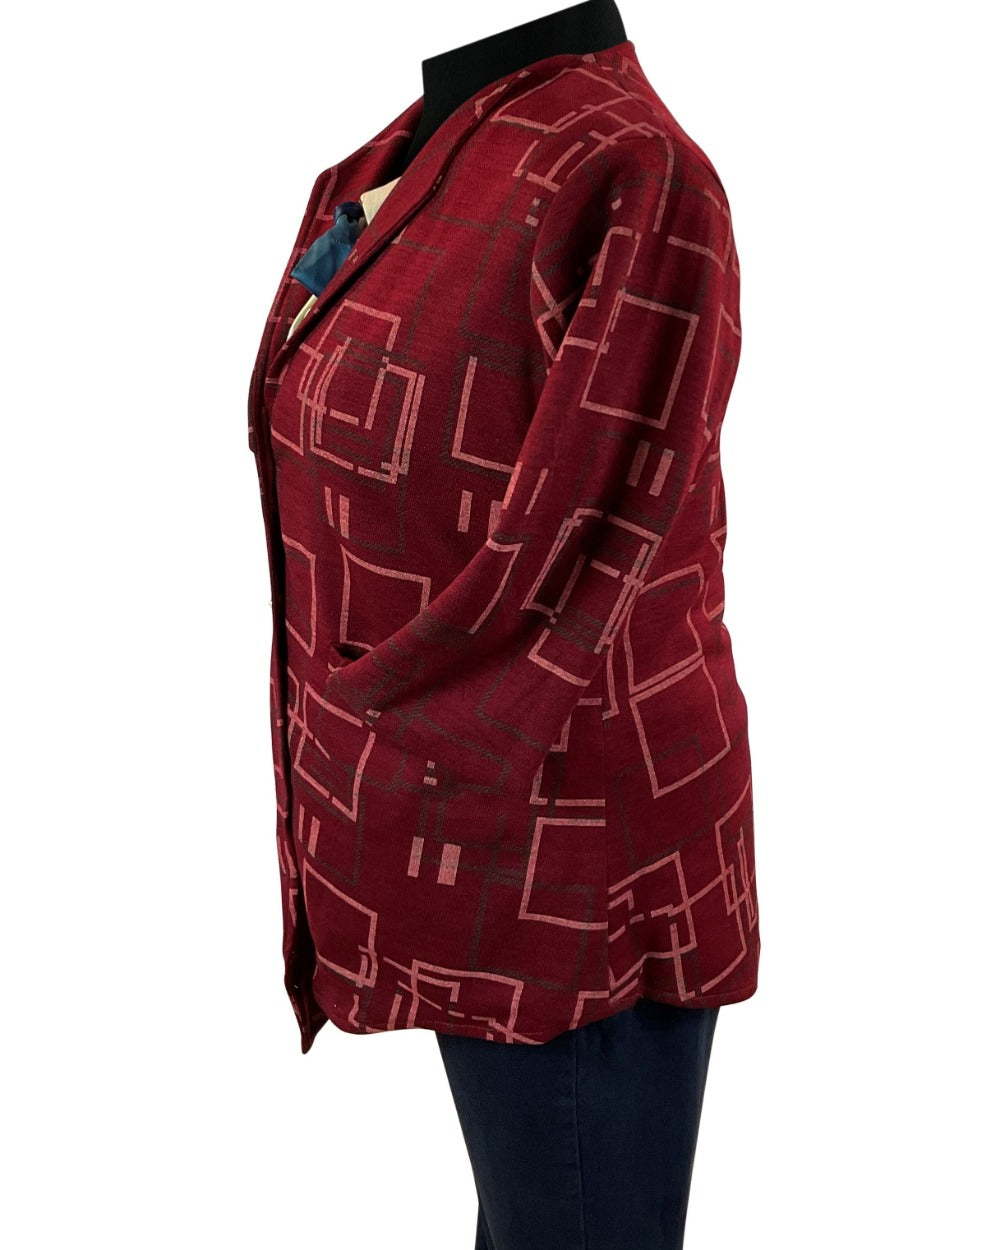 Women's red jacket, asymmetrical hem high quality wool jacket, Perth, Au